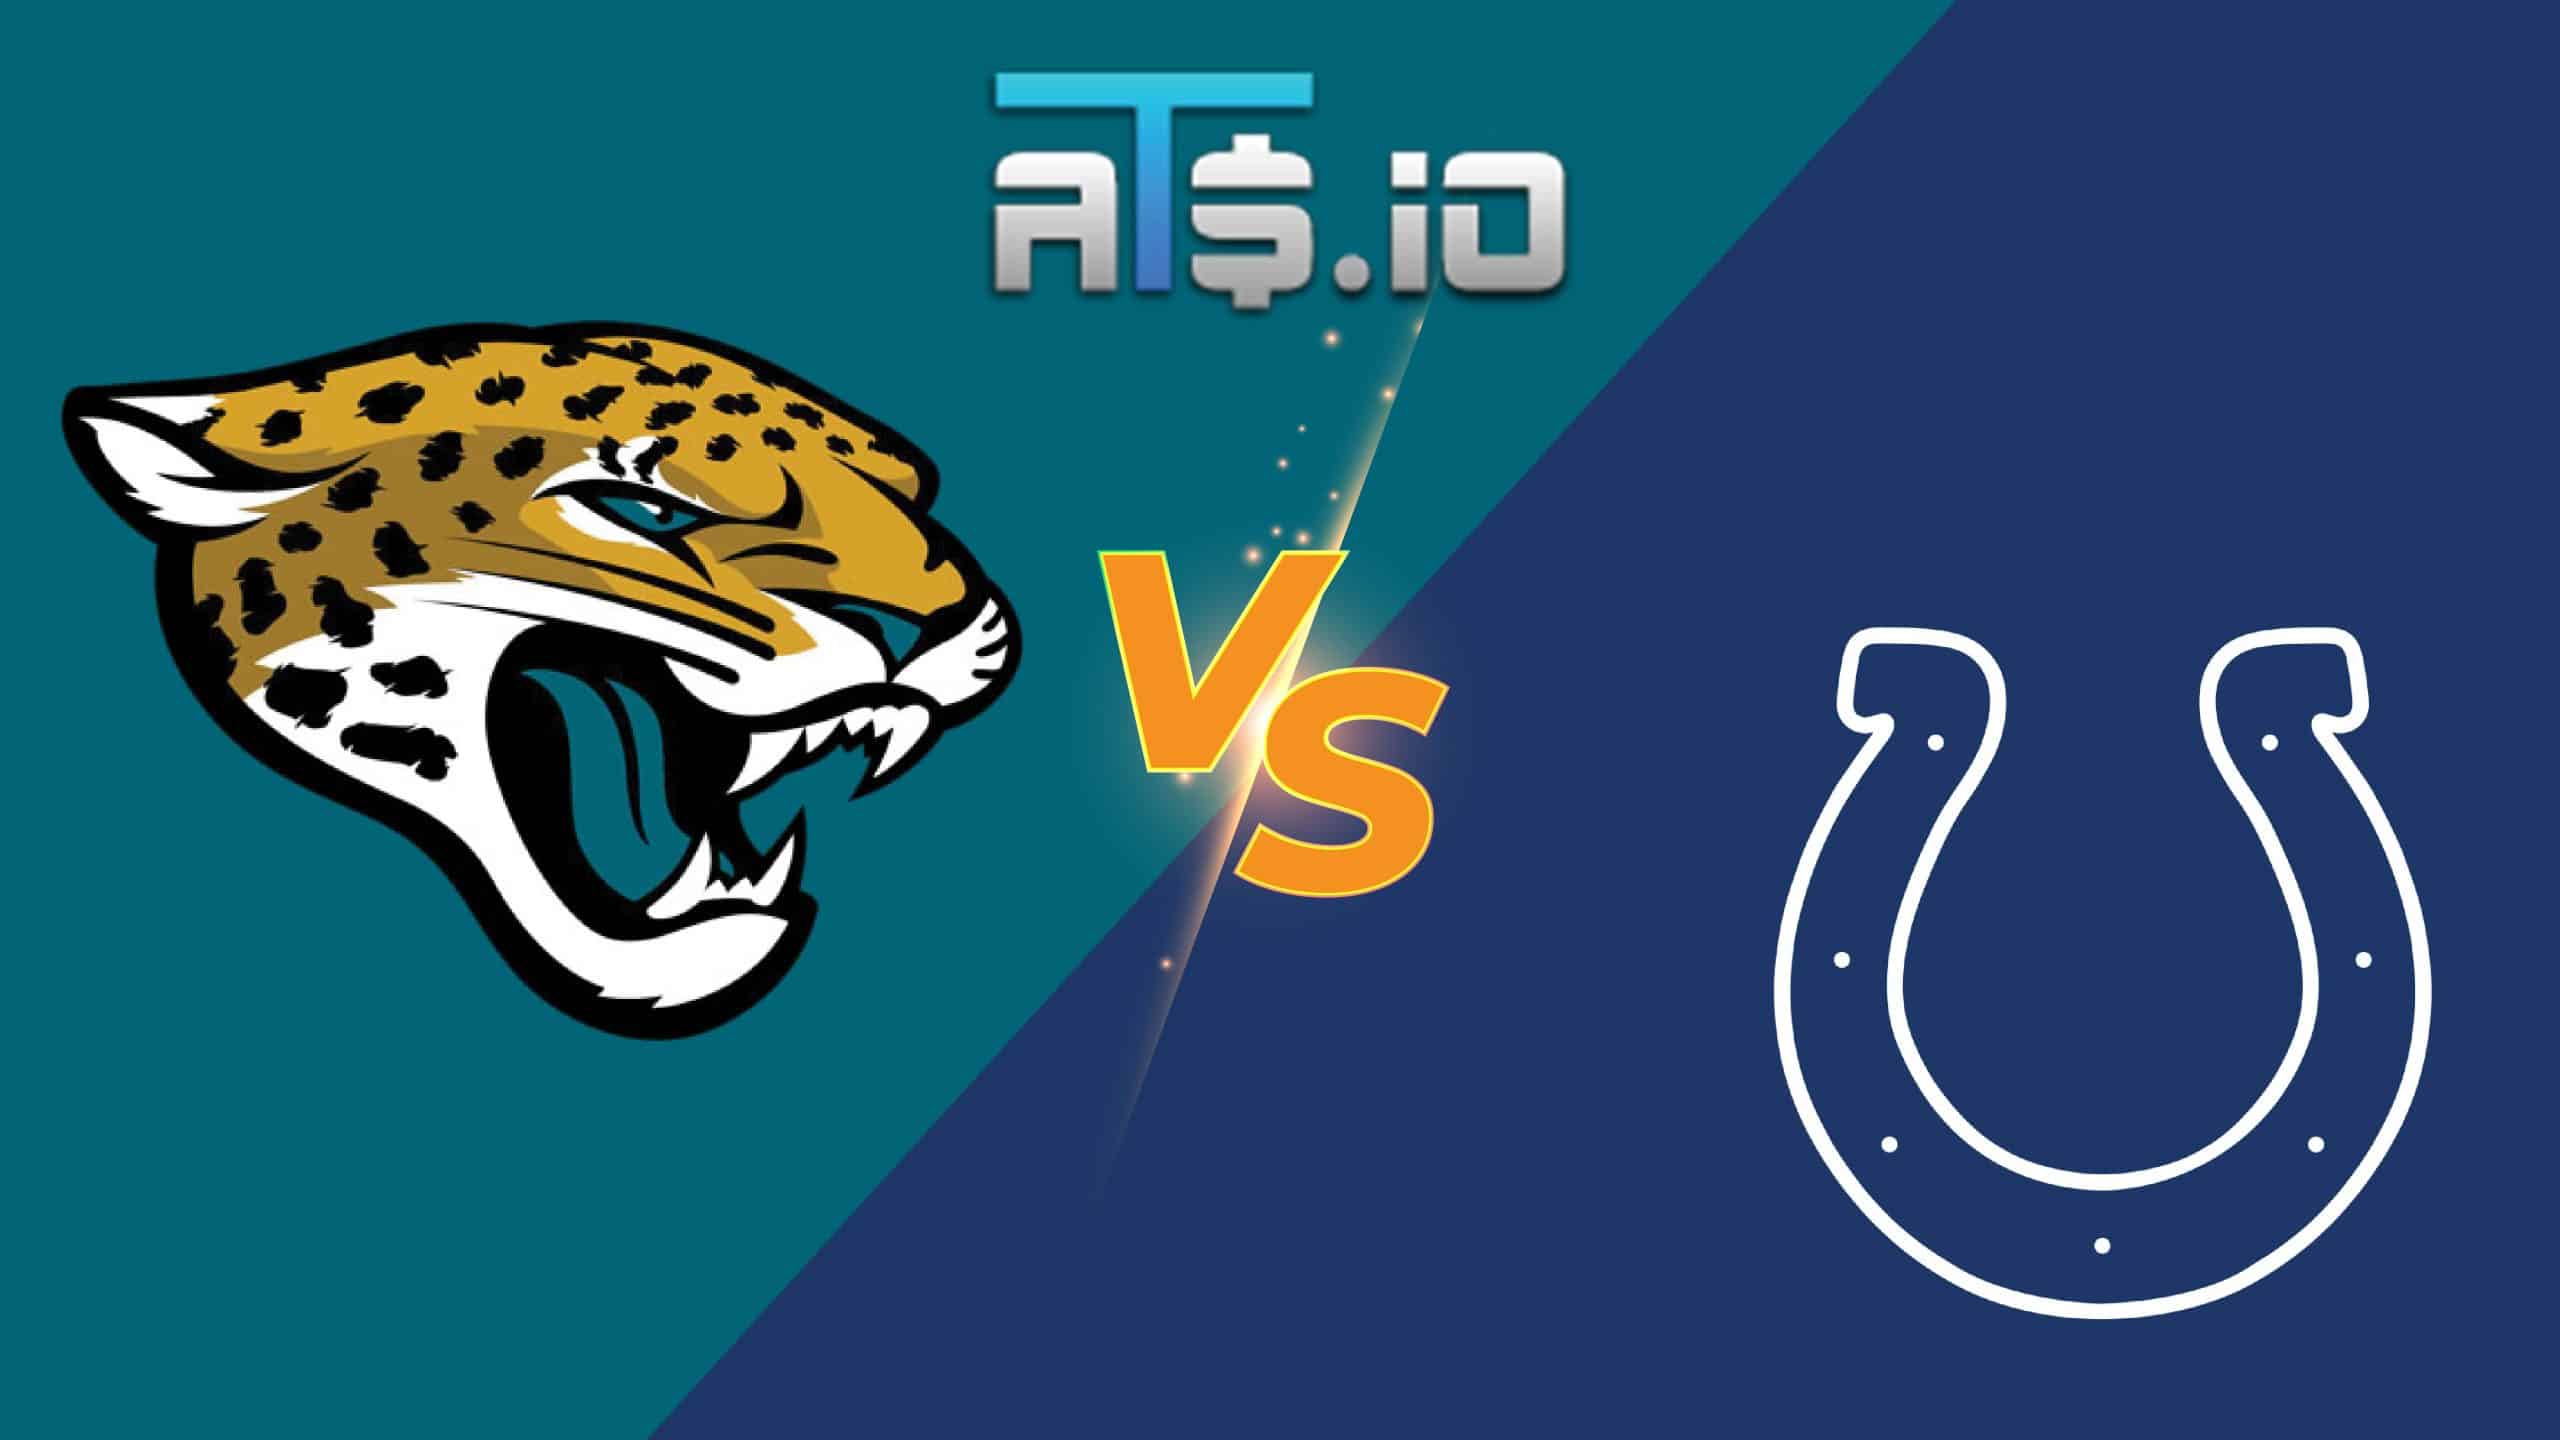 Jacksonville Jaguars vs. Indianapolis Colts: Date, kick-off time